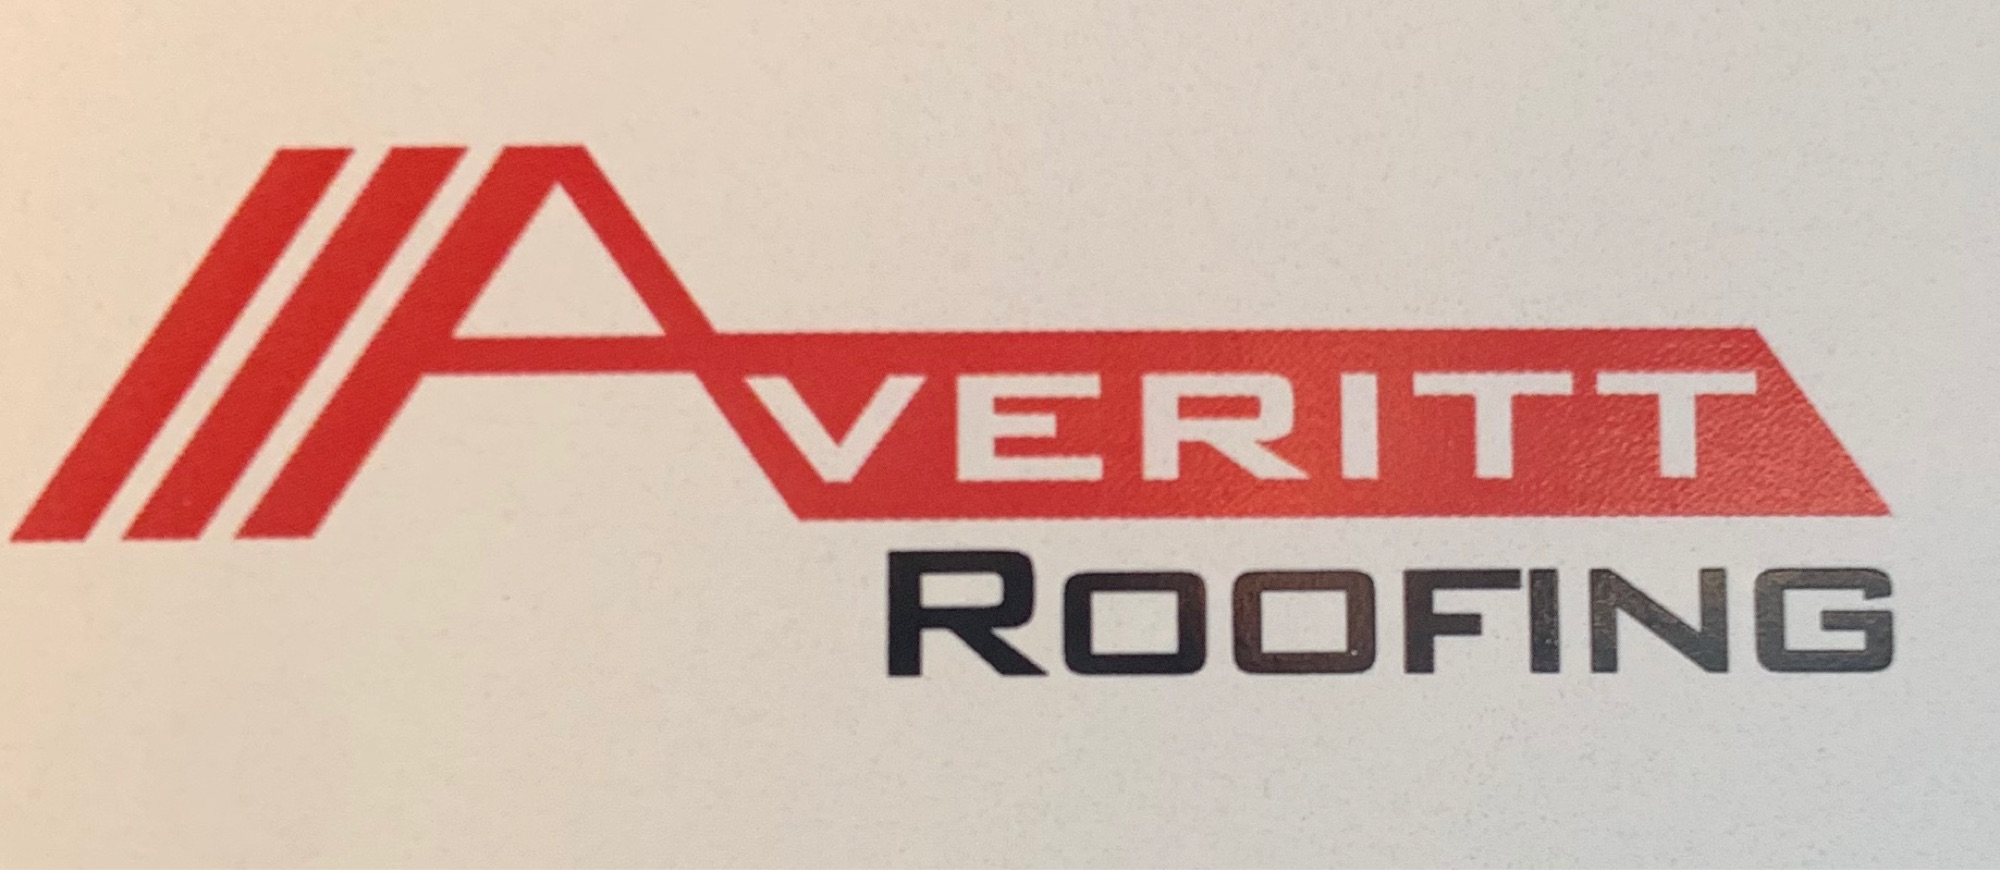 Averitt Roofing and Construction Logo